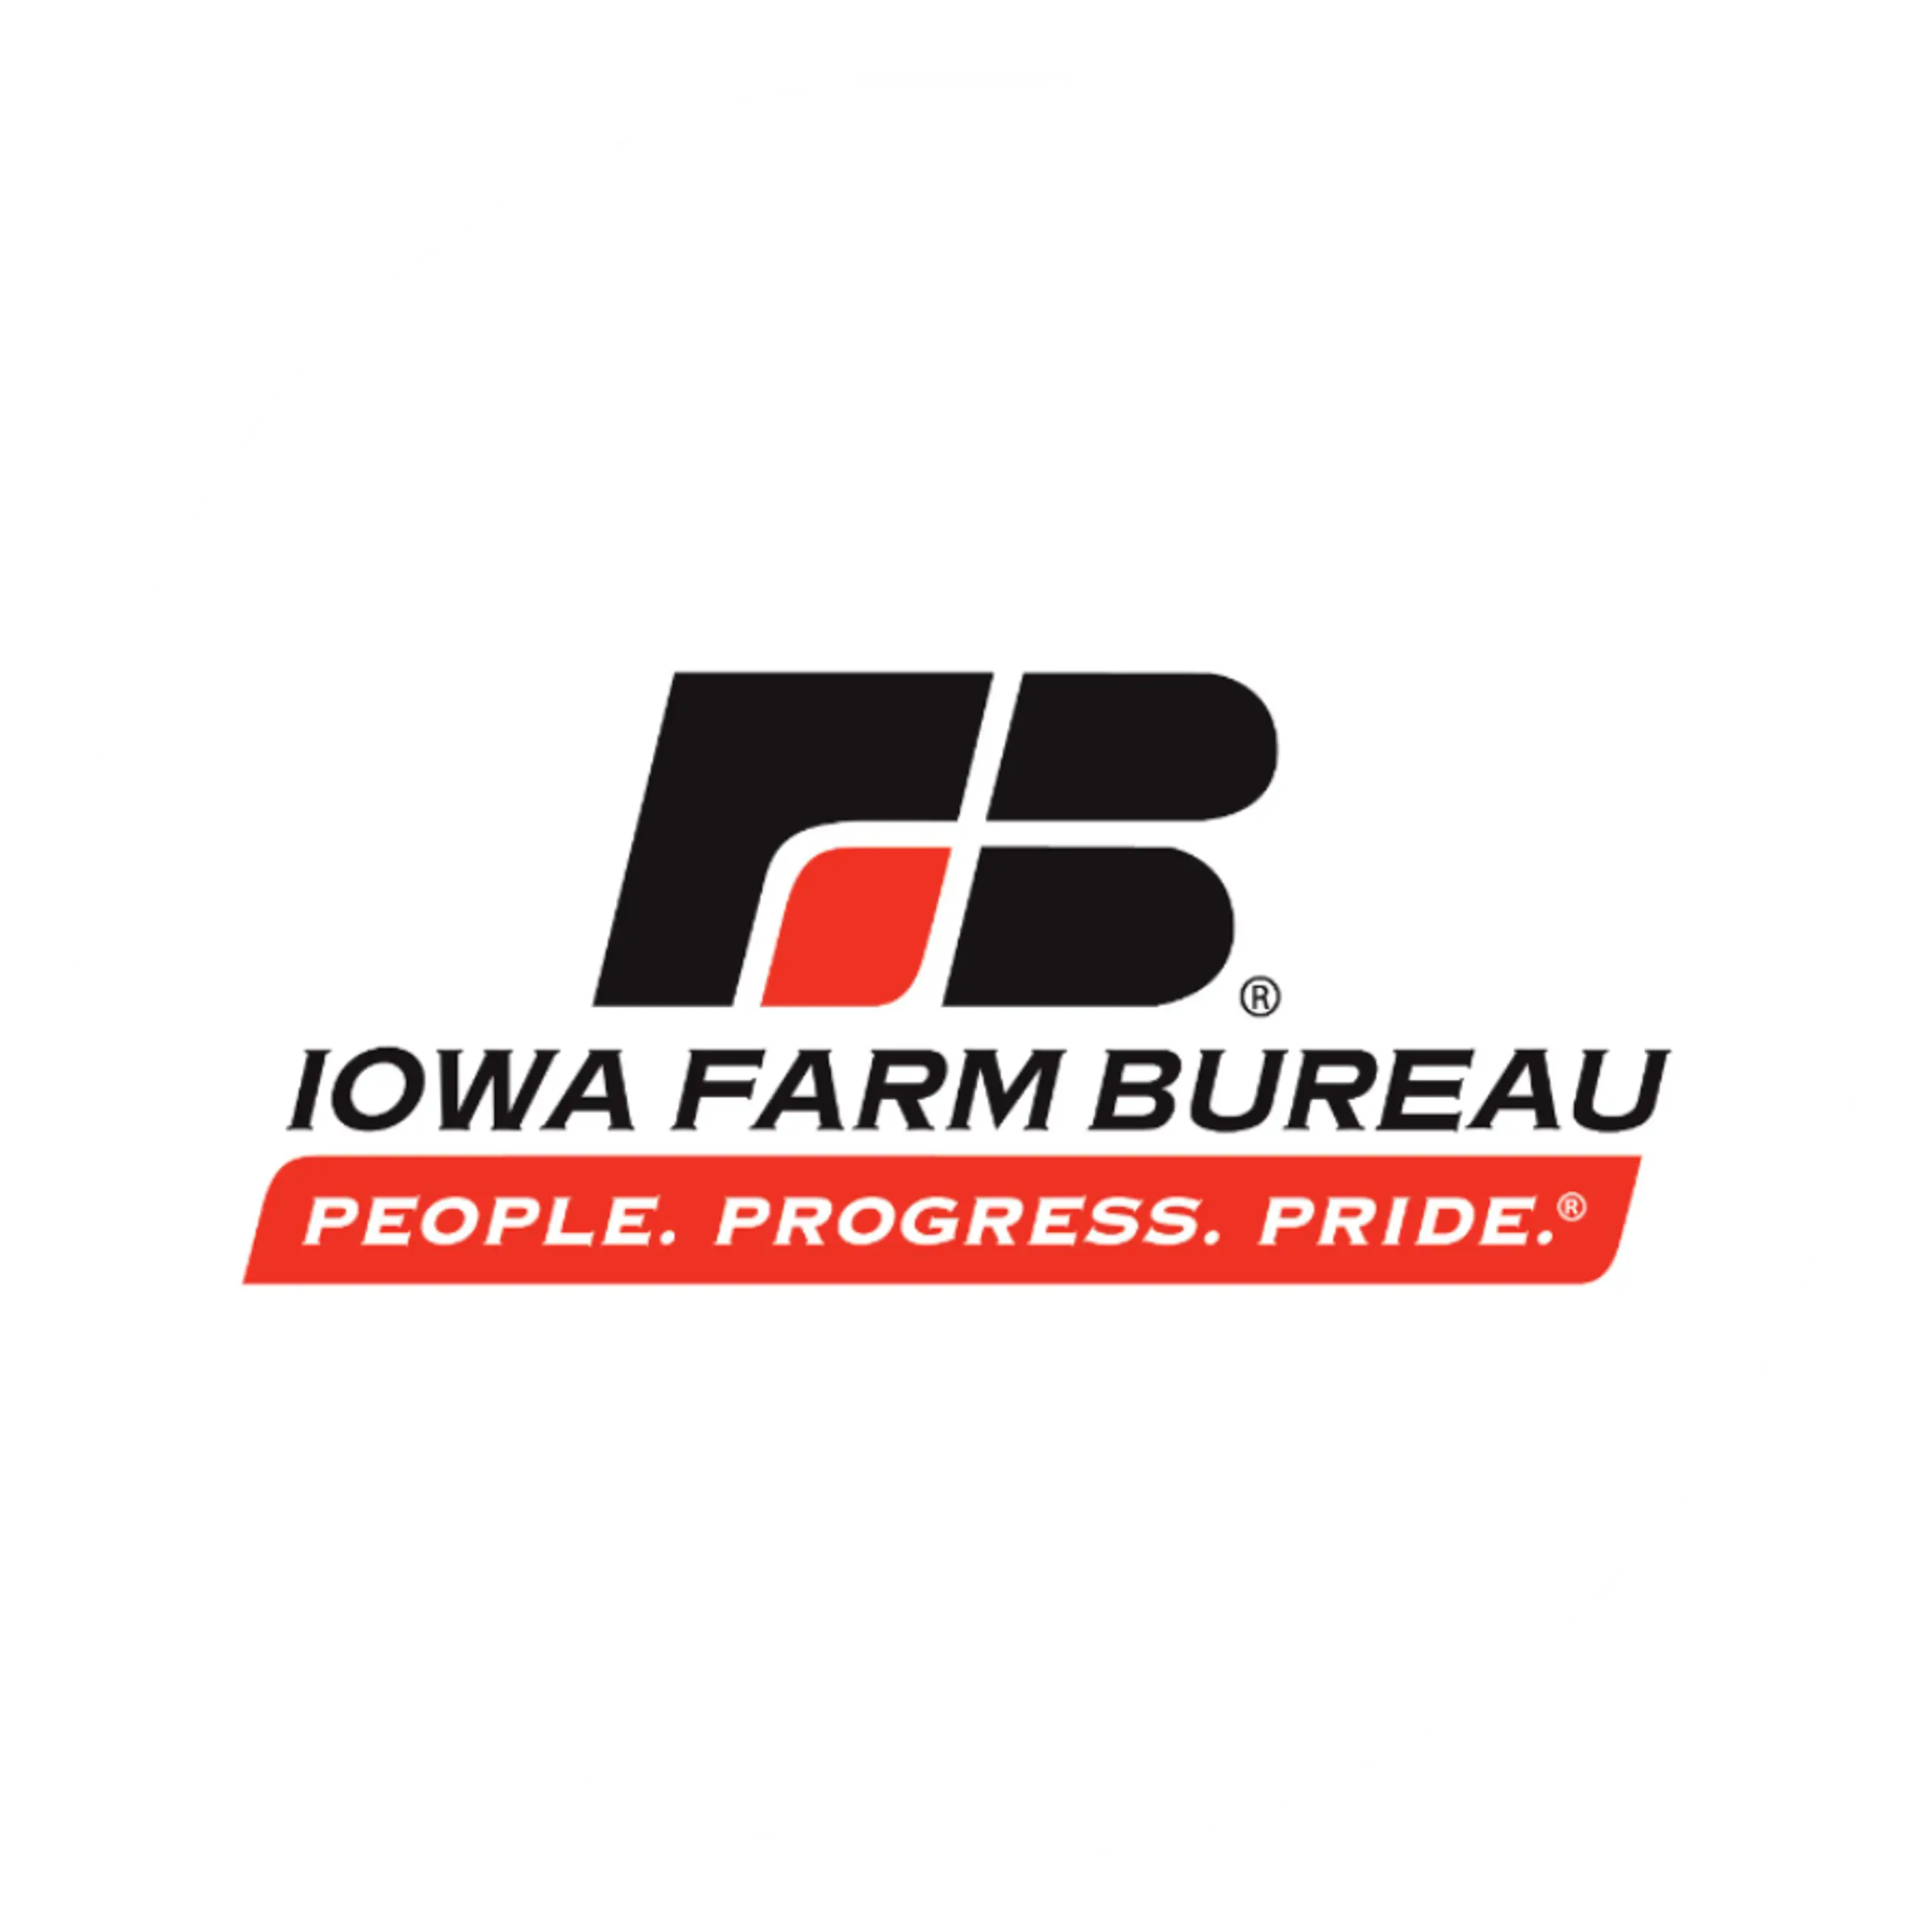 Iowa Farm Bureau logo